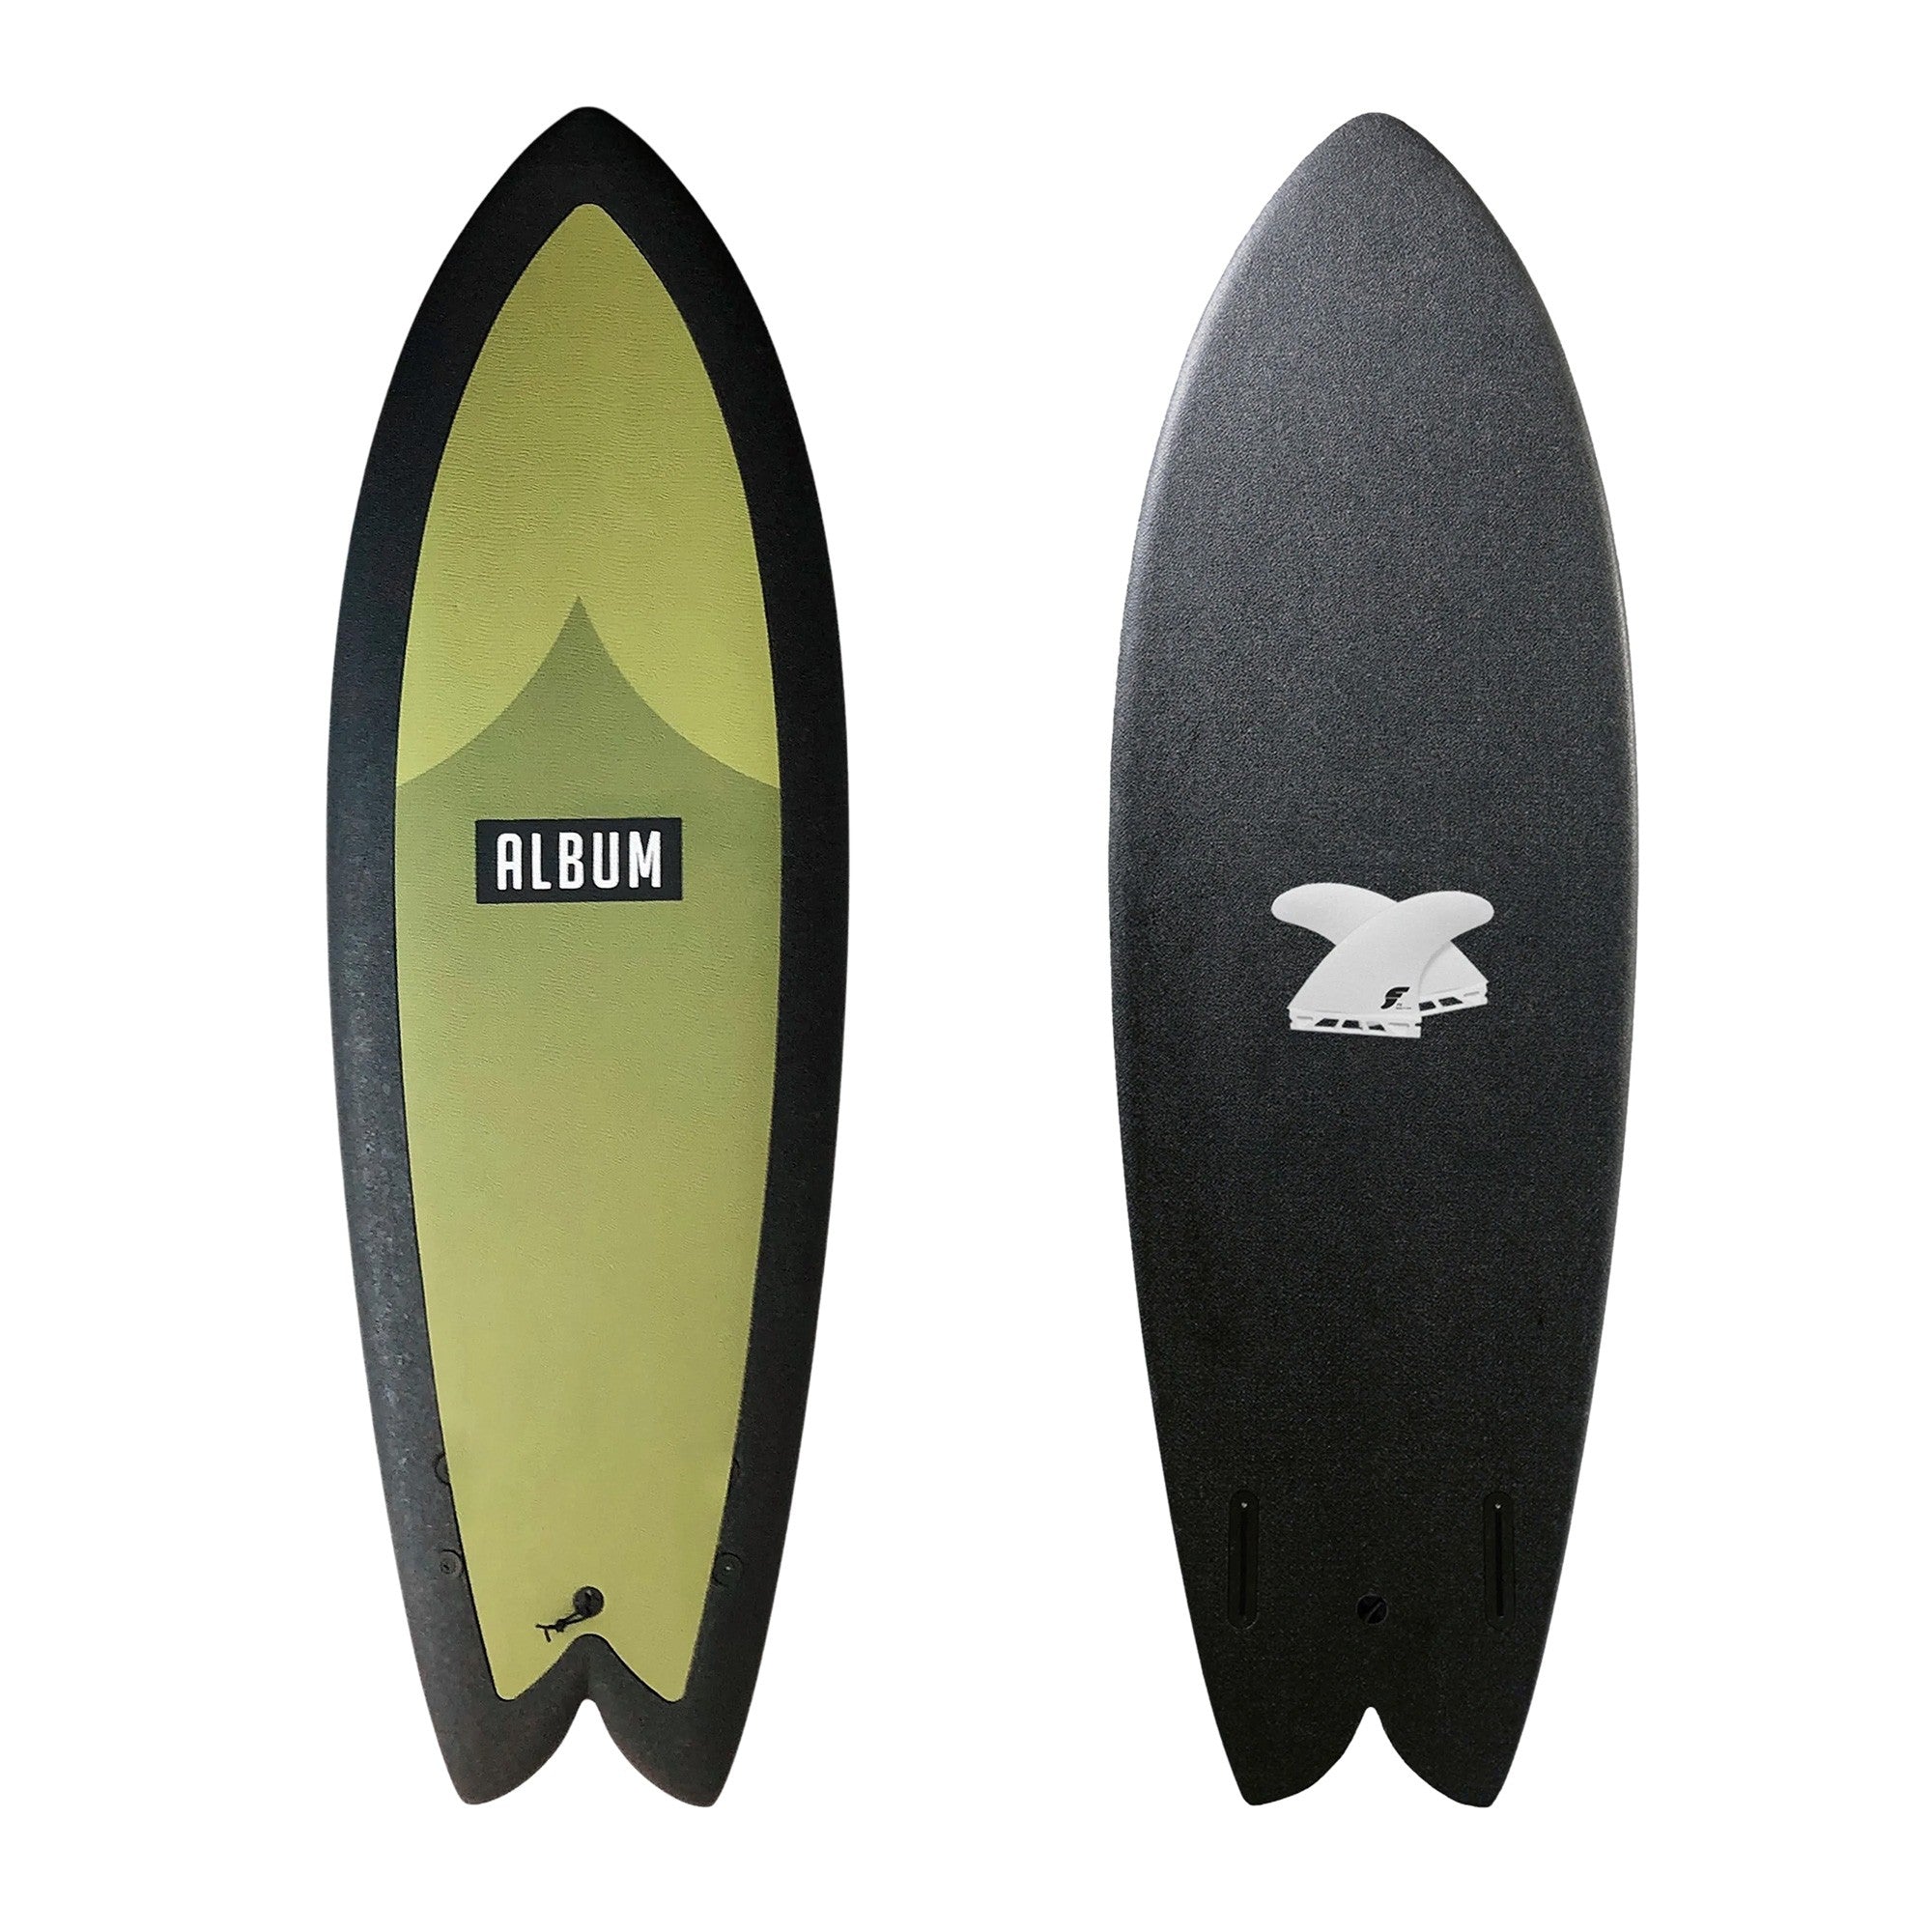 ALBUM Surfboards - Presto Fish 5'7 Soft Top - Olive